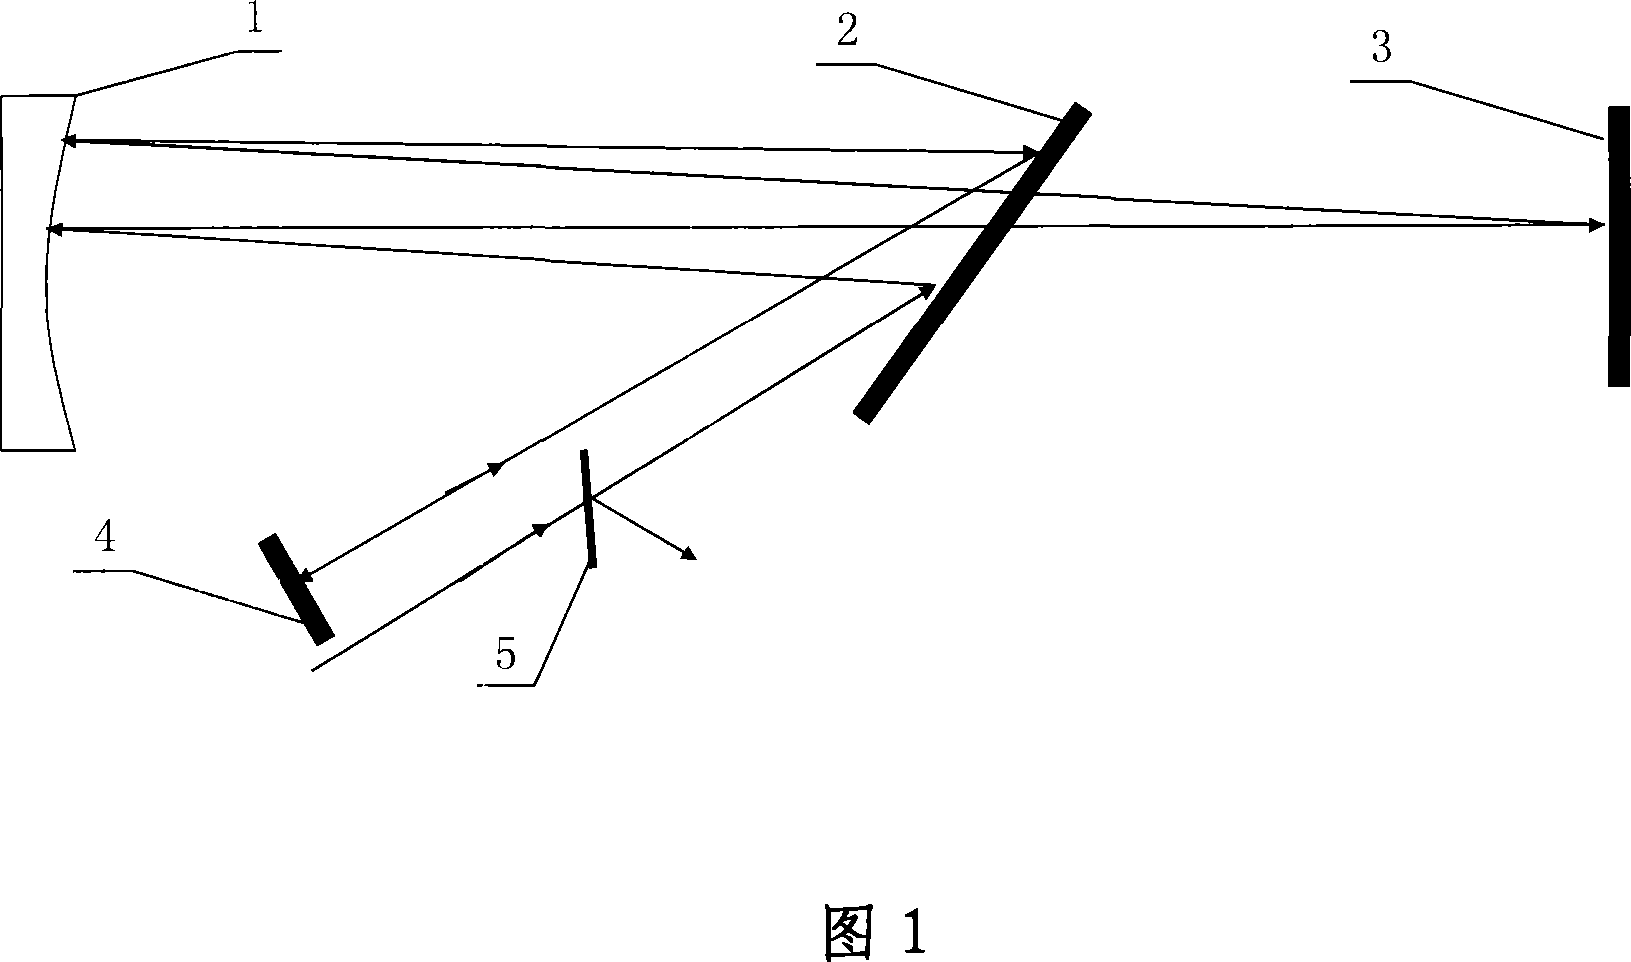 Folding reflective single optical grating expending device